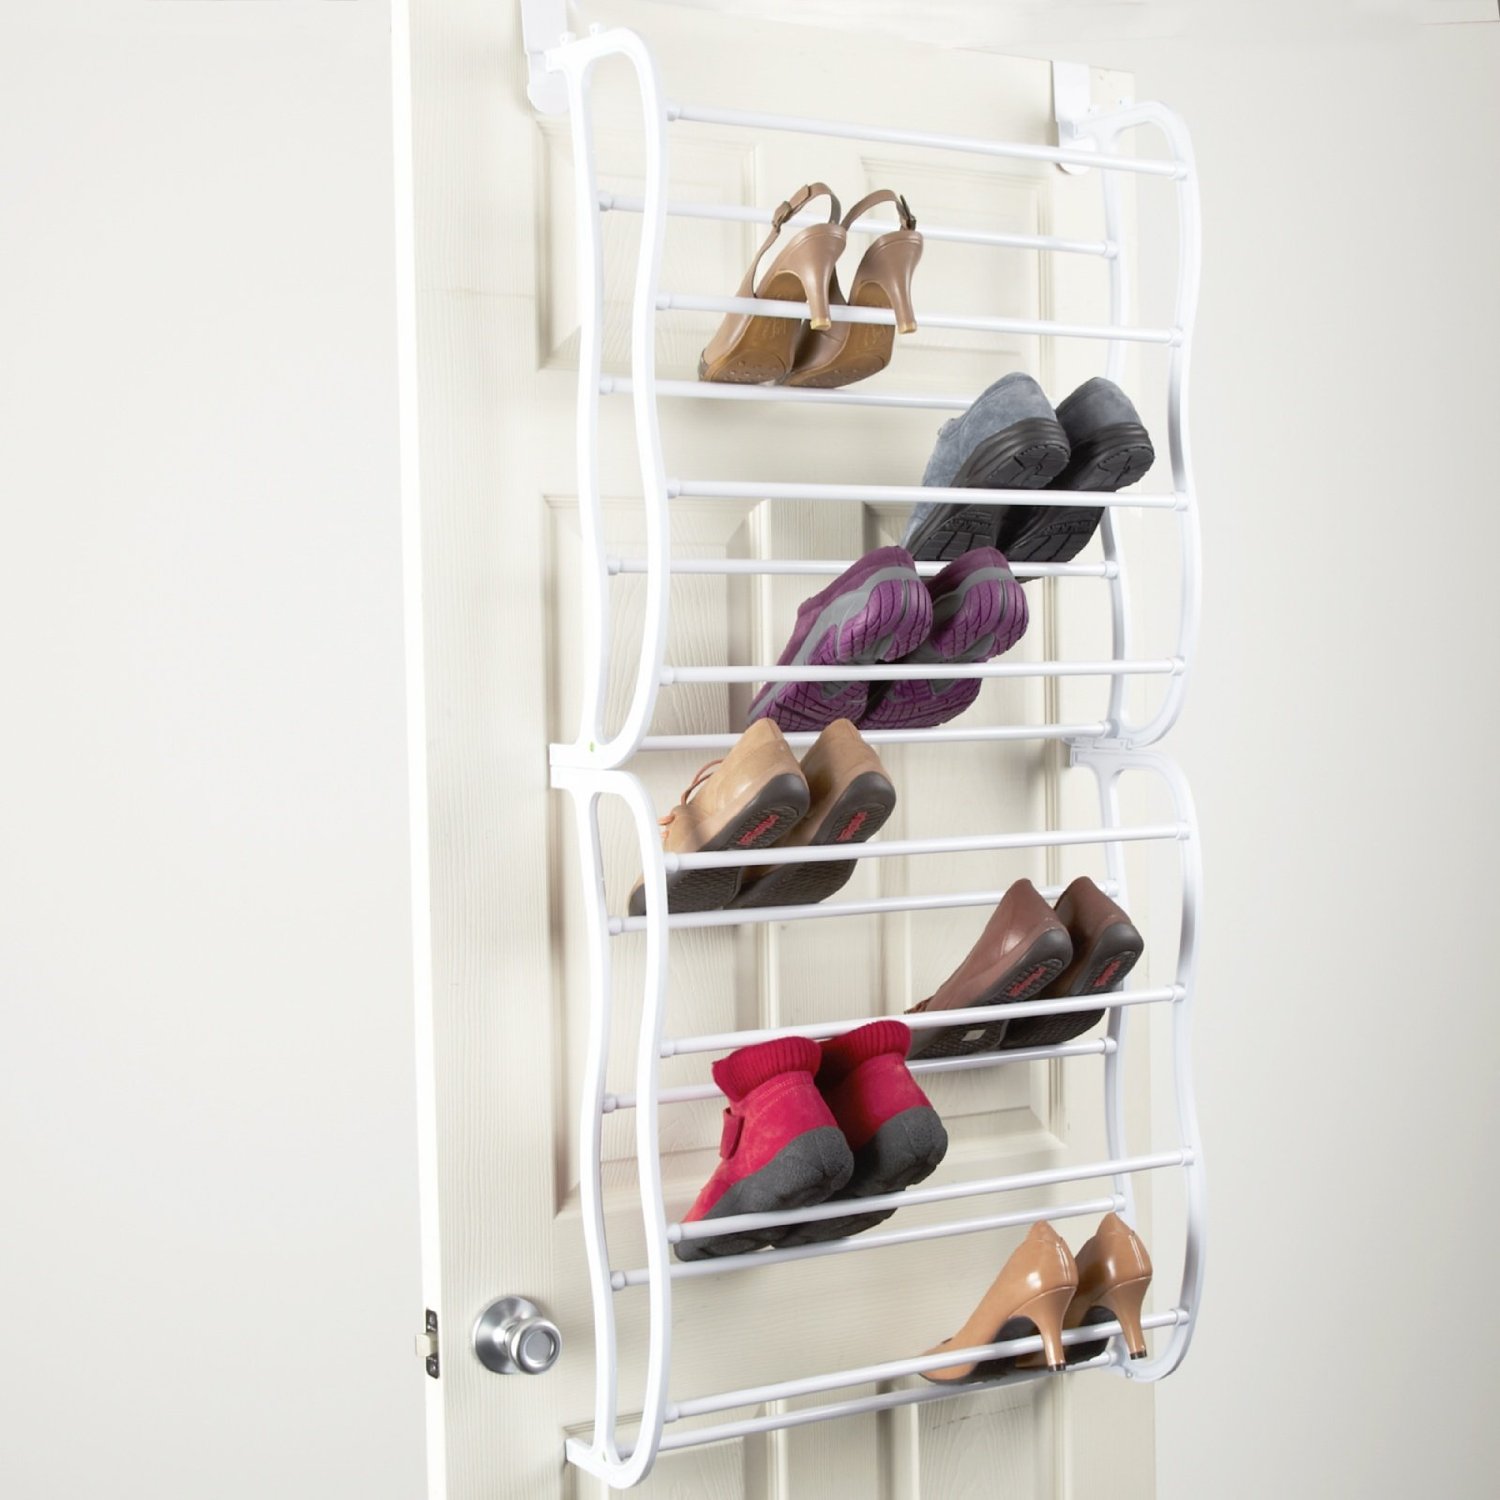 Photos of Innovative Shoe Racks For Closets Design And Ideas Image Of Door. toenail wall mounted shoe racks for closets